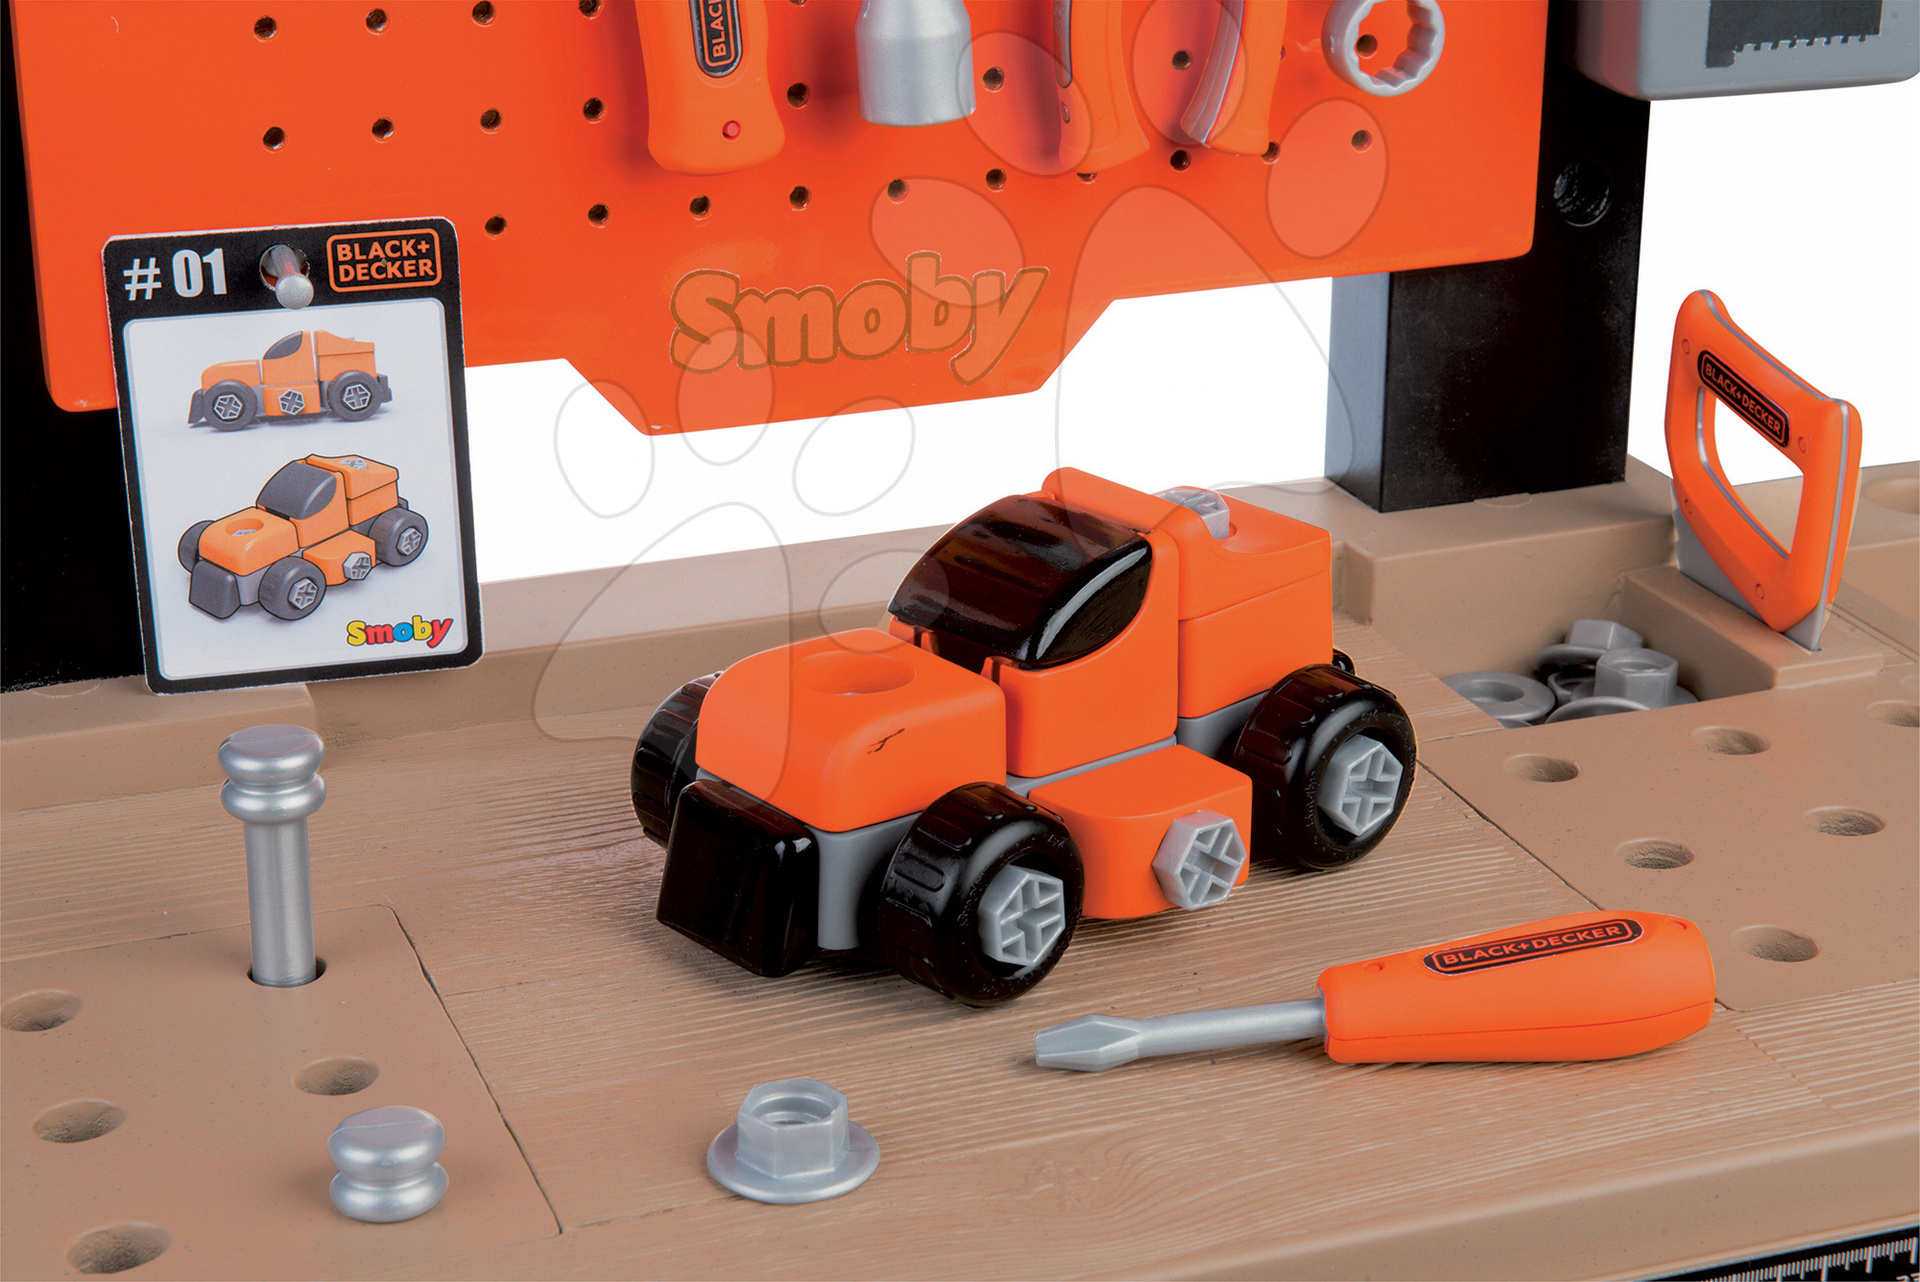 Smoby Black + Decker toy workbench